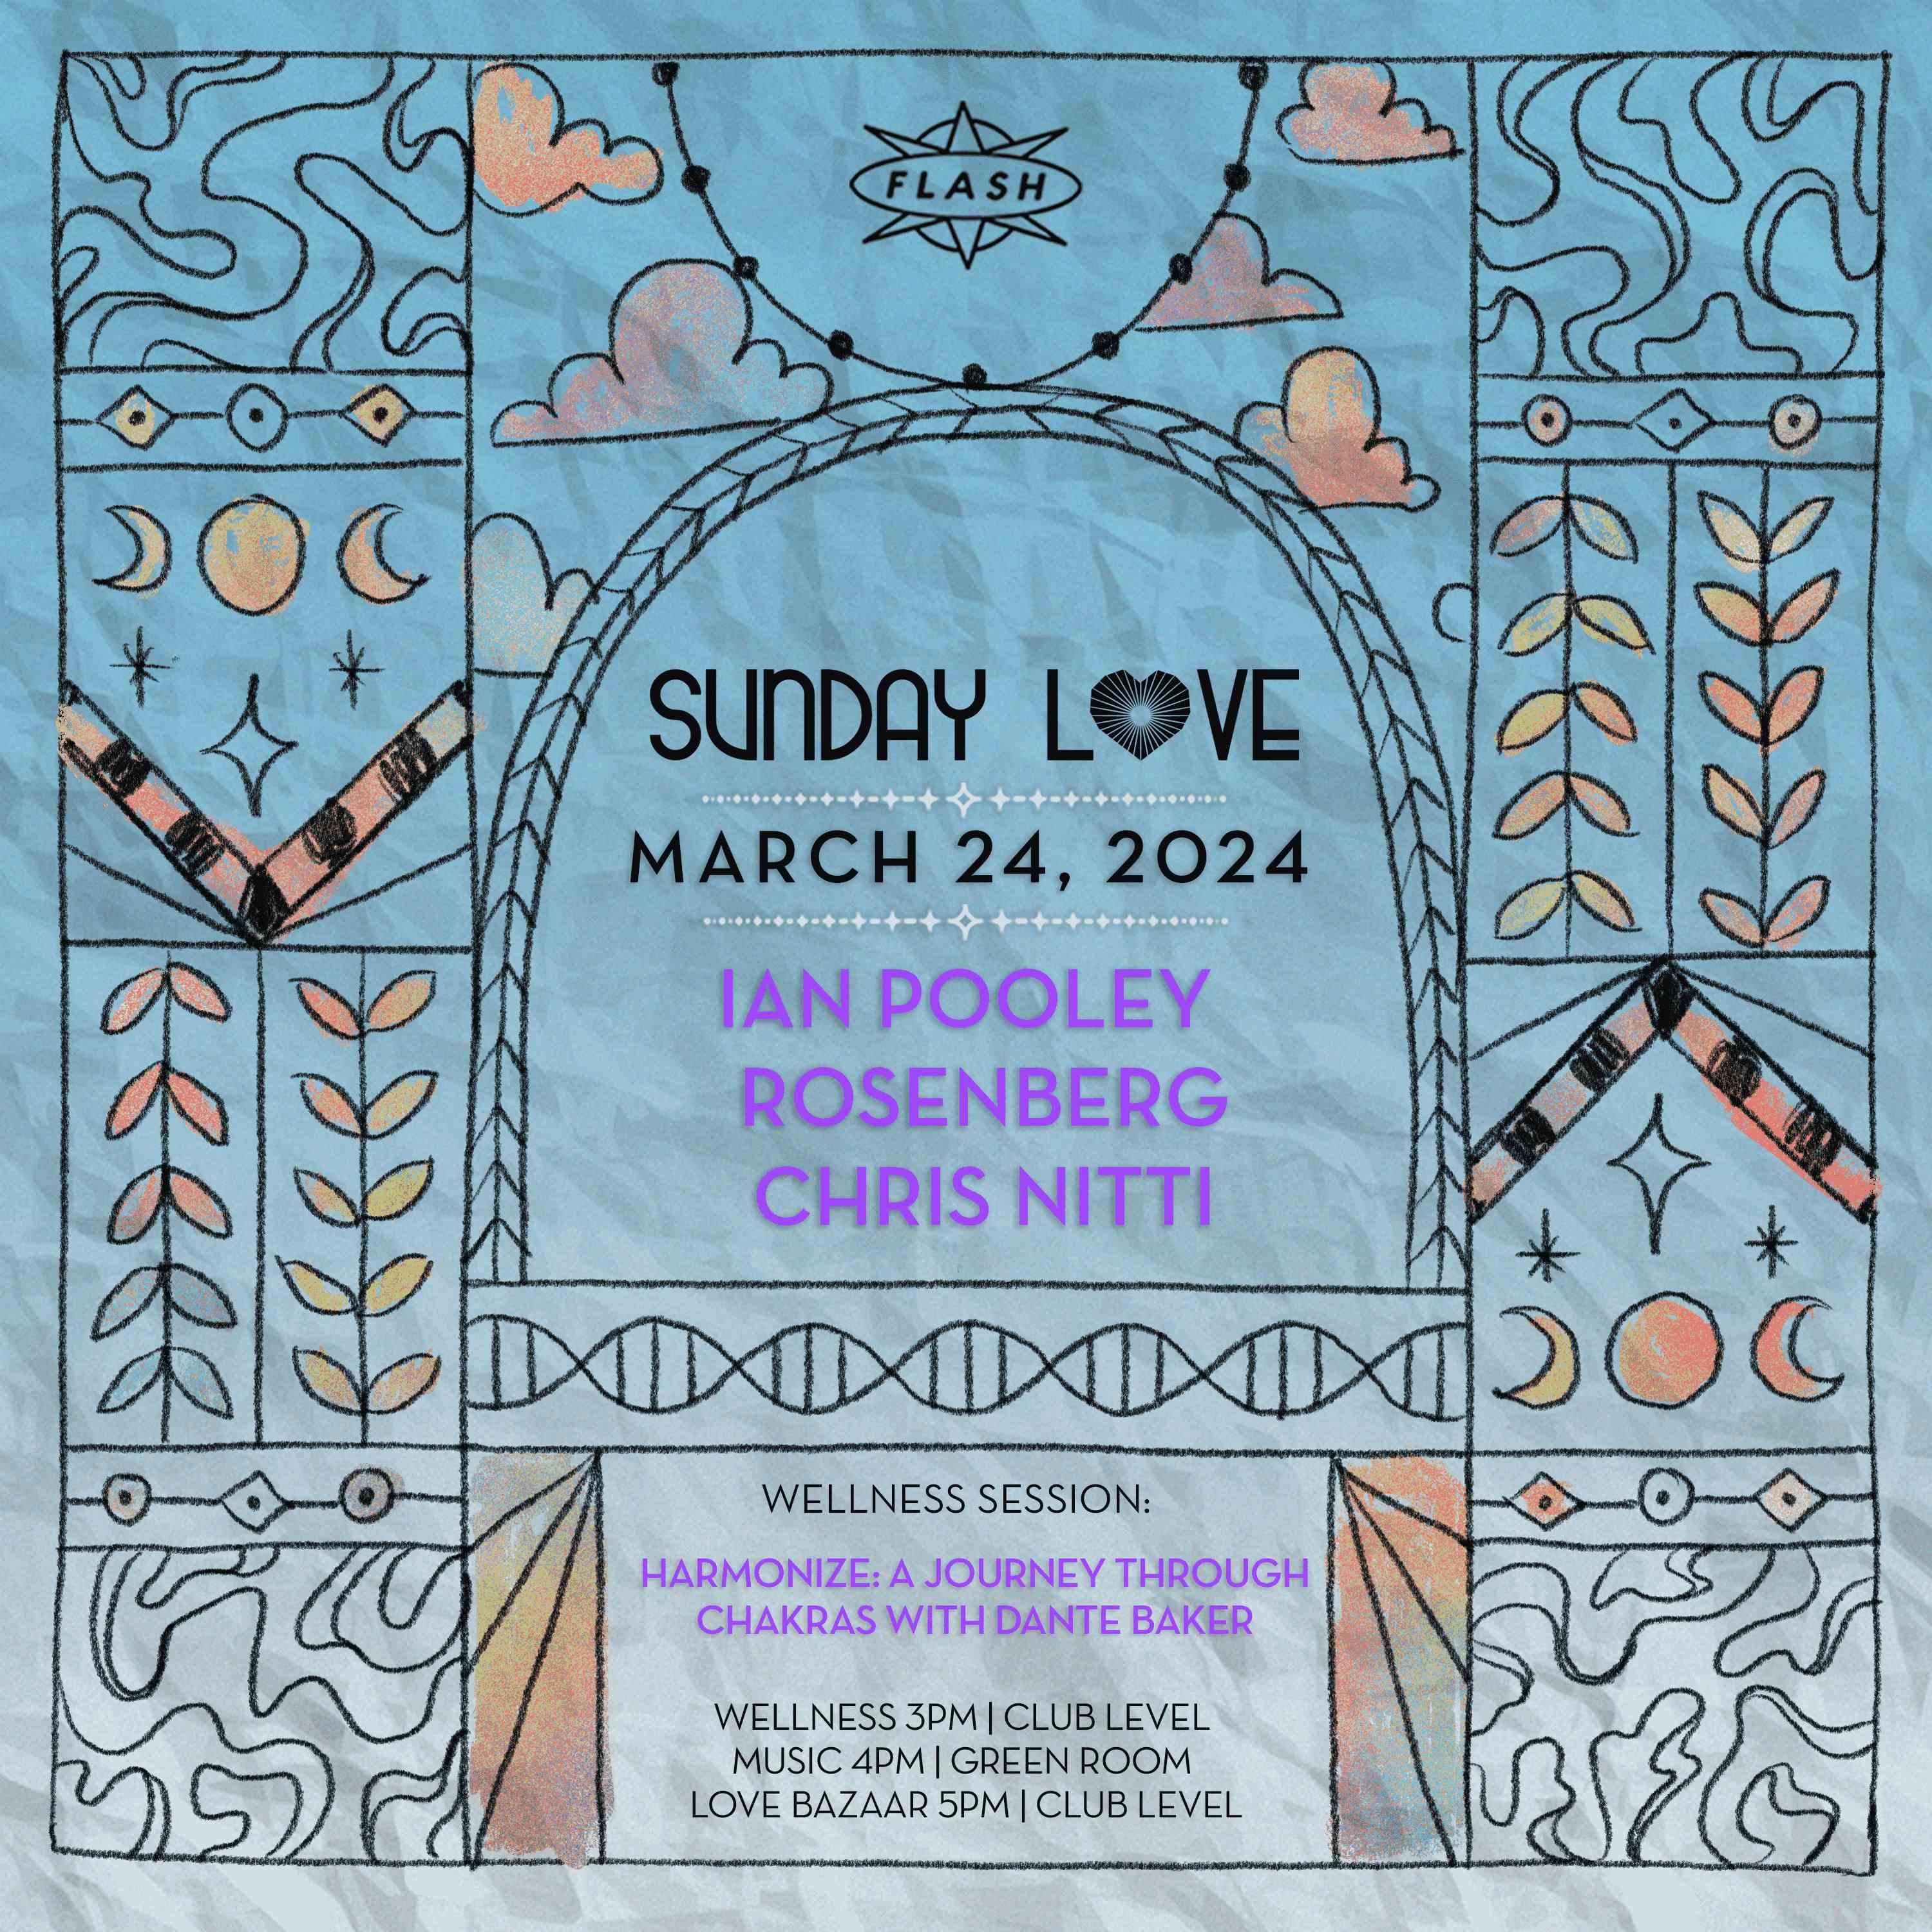 Sunday Love: Ian Pooley - Rosenberg - Chris Nitti event flyer